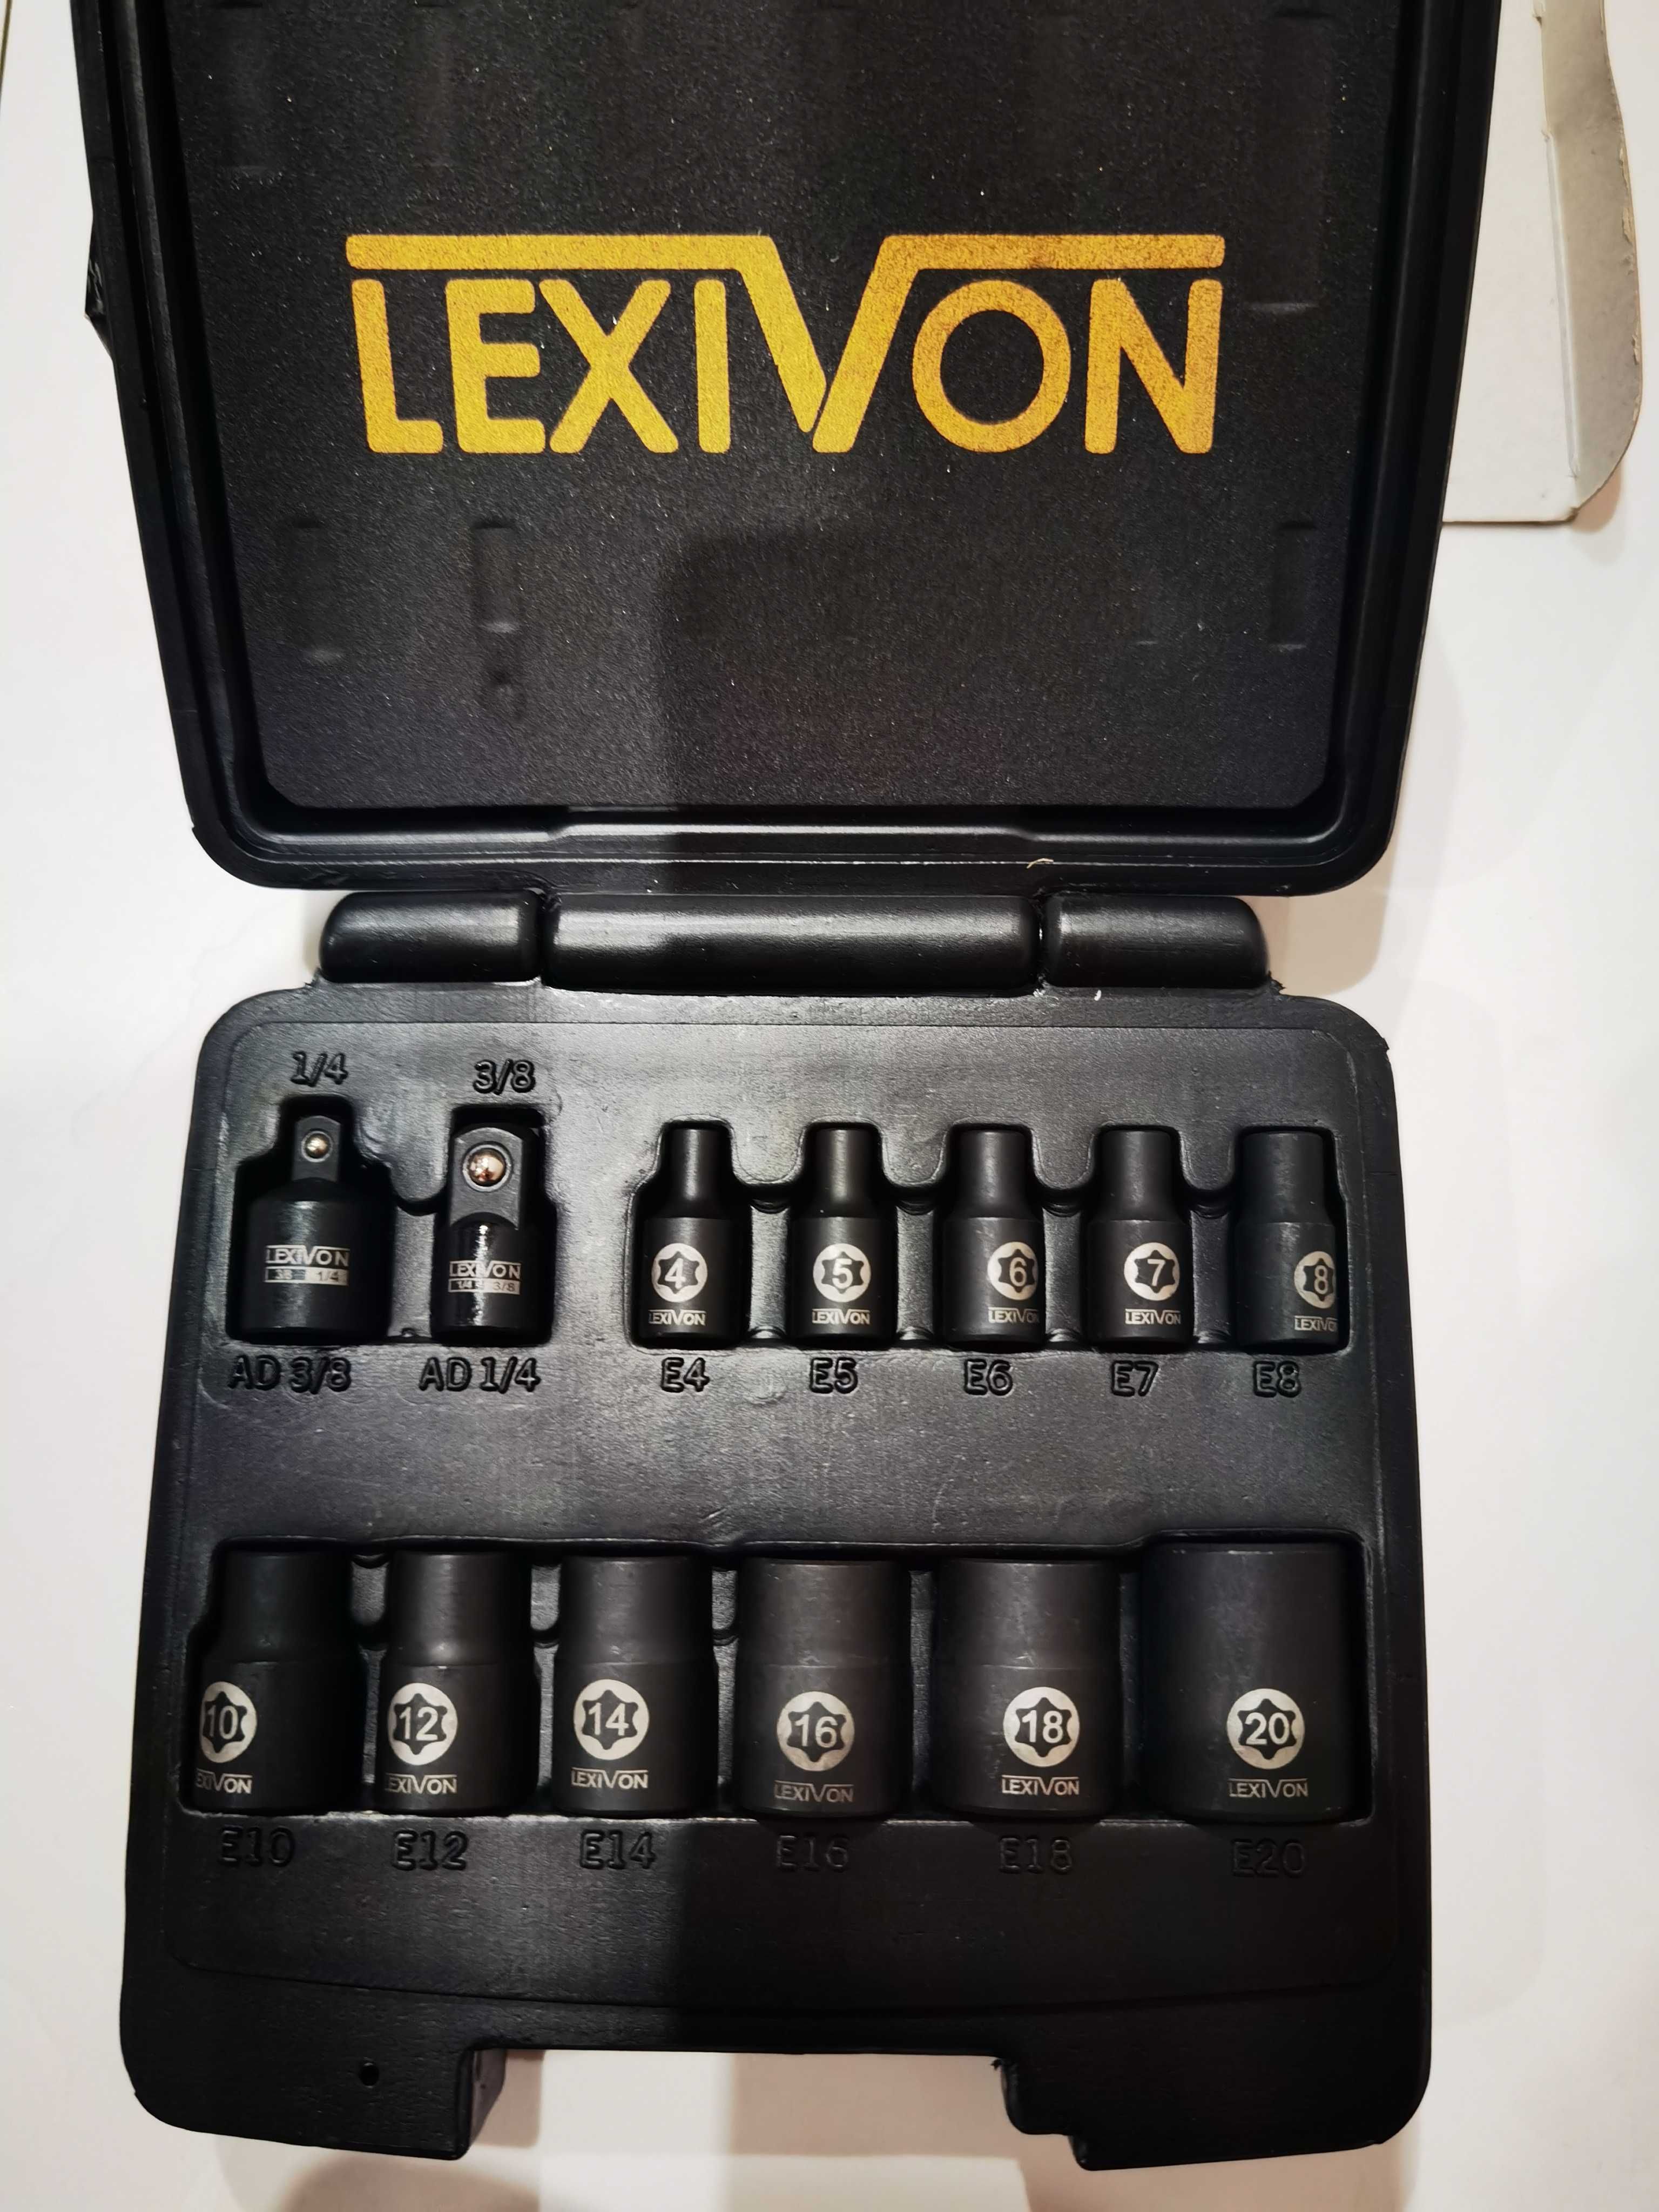 Lexivon E-torx комплект